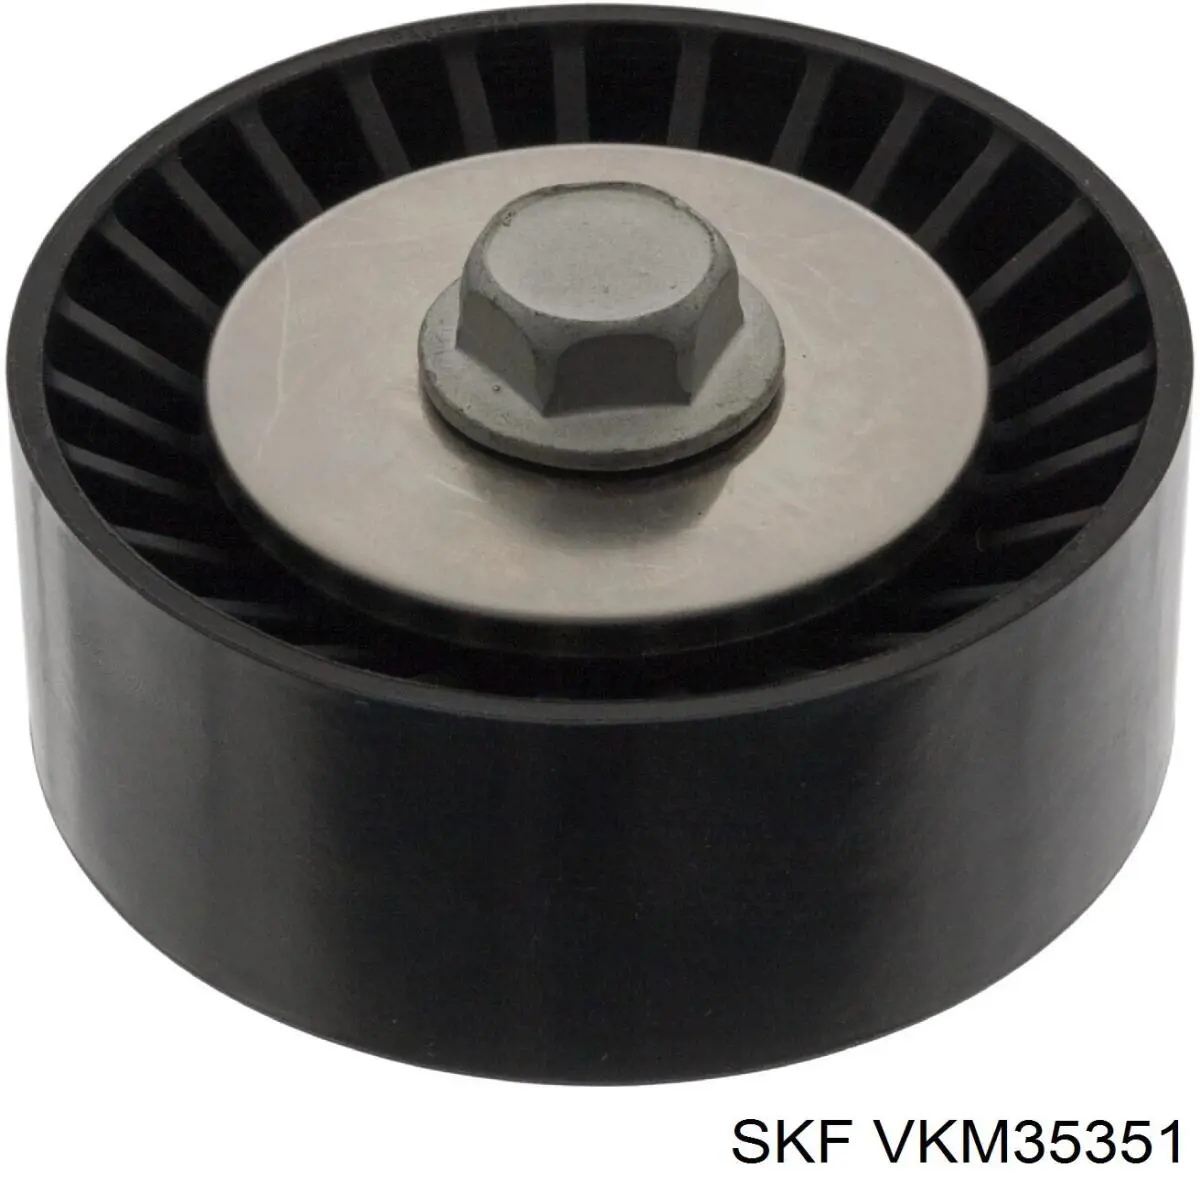 VKM35351 SKF polea inversión / guía, correa poli v